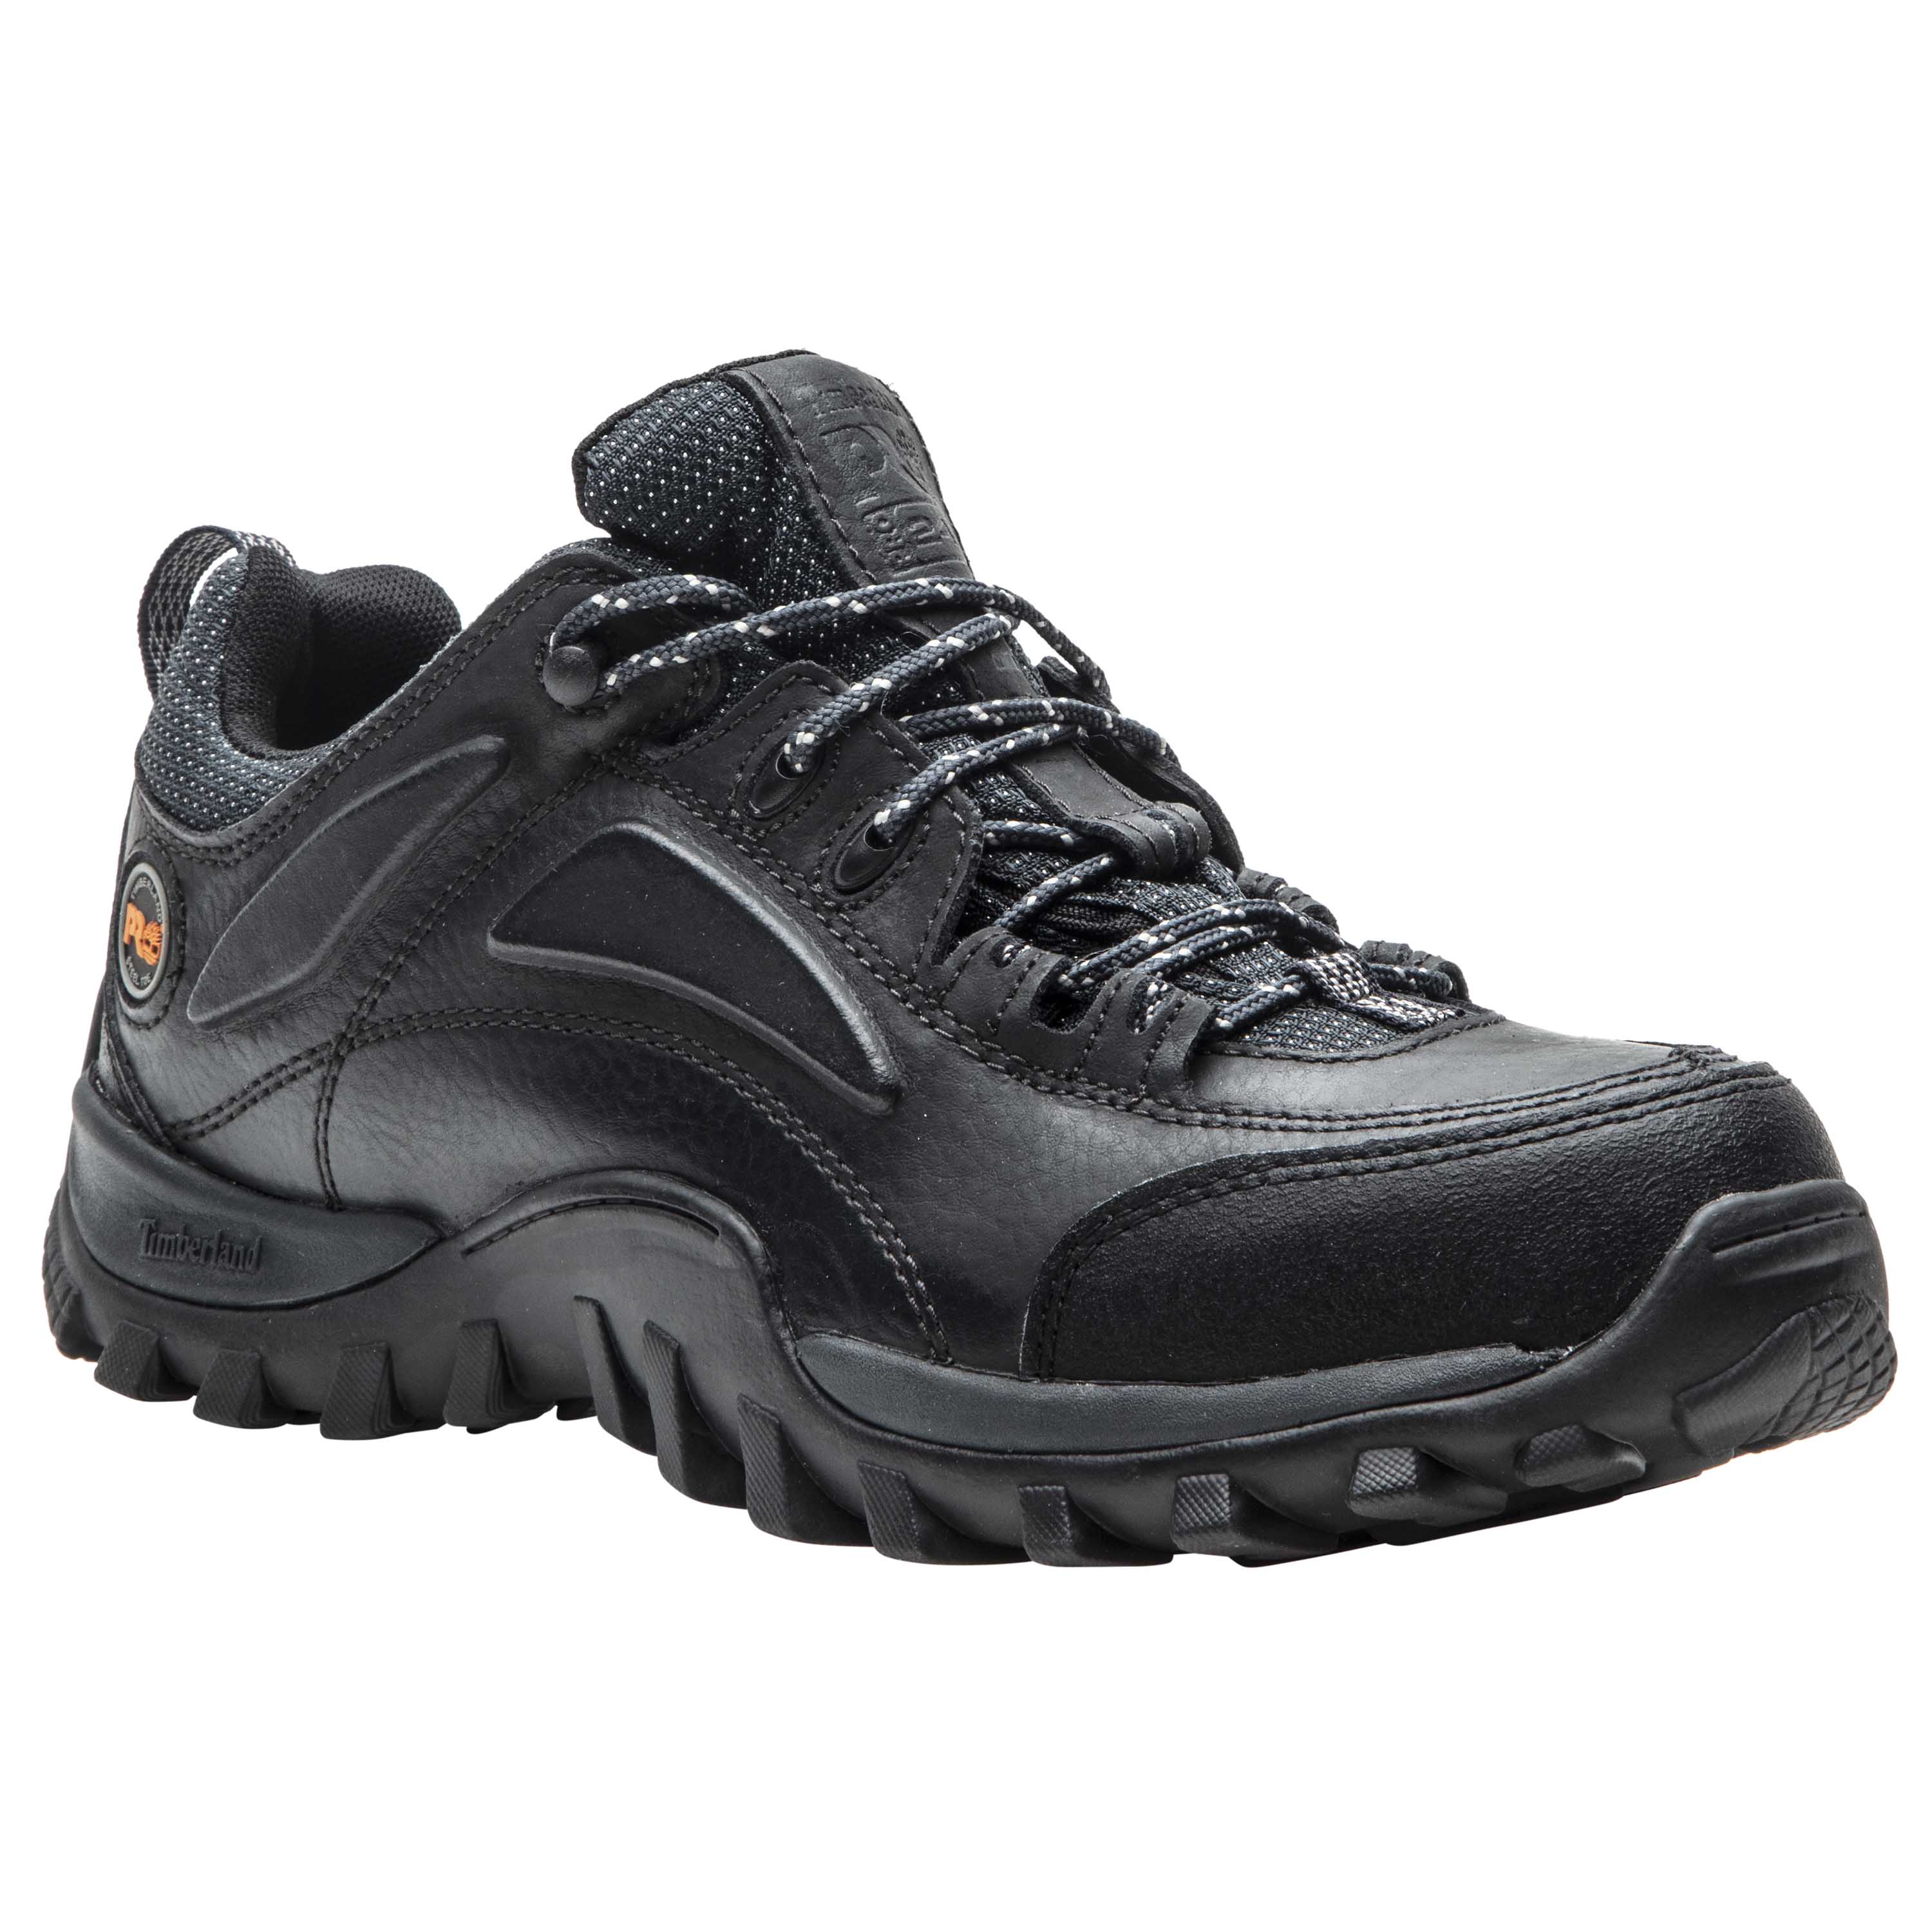 Timberland Pro Men's Mudsill Steel Toe Work Shoe Black Style 40008 | eBay